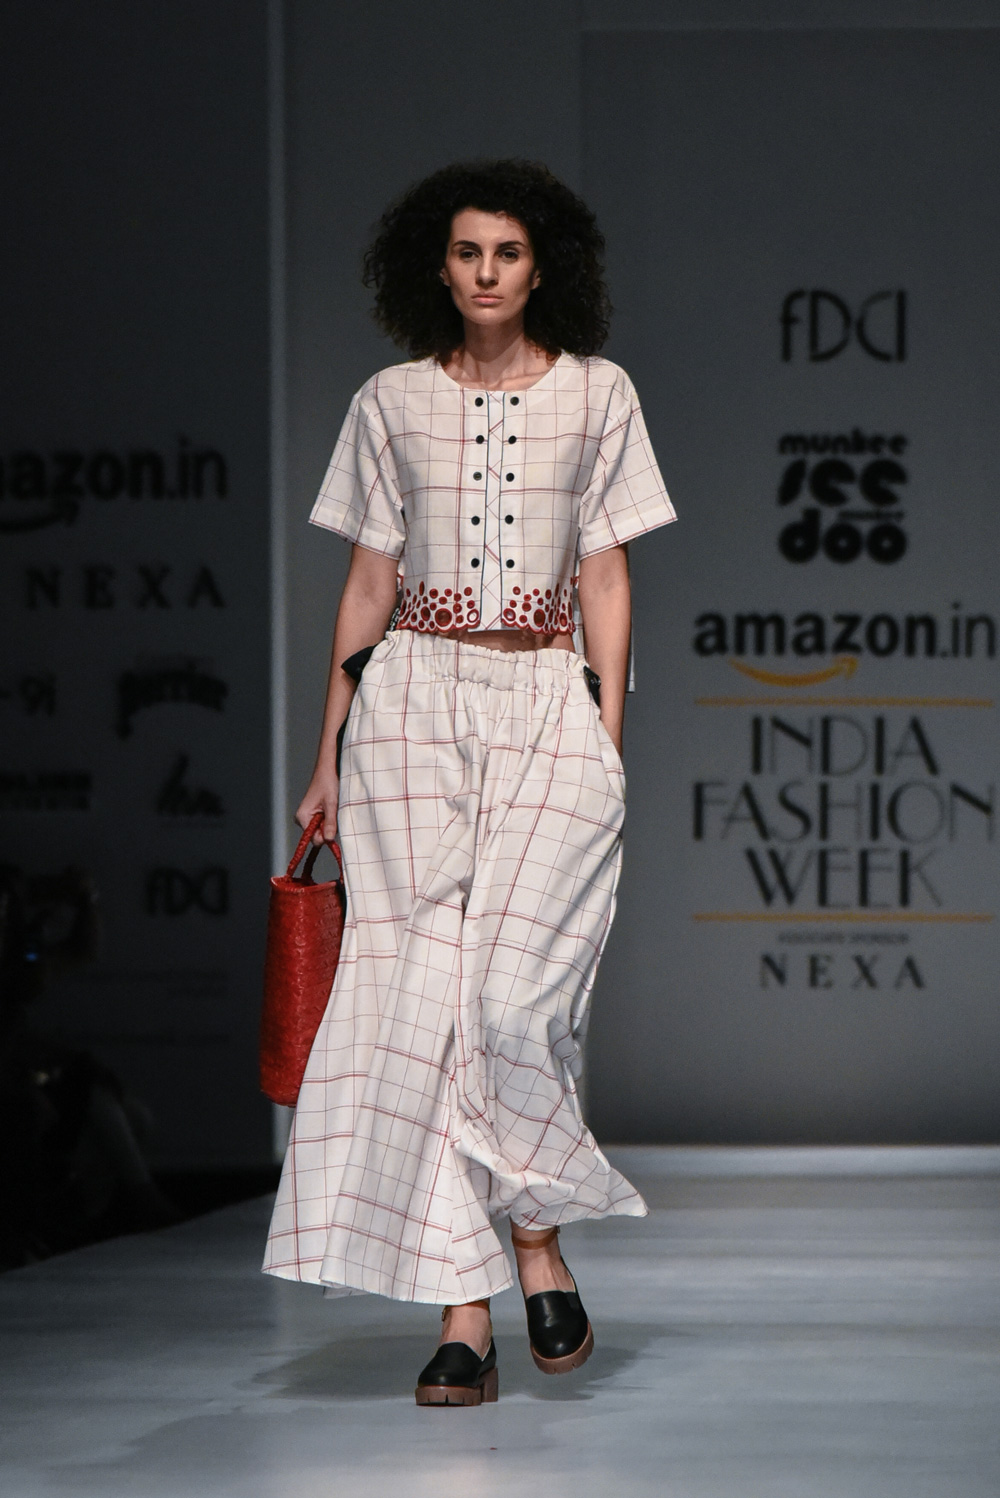 Munkee.See.Munkee.Doo FDCI Amazon India Fashion Week Spring Summer 2018 Look 1